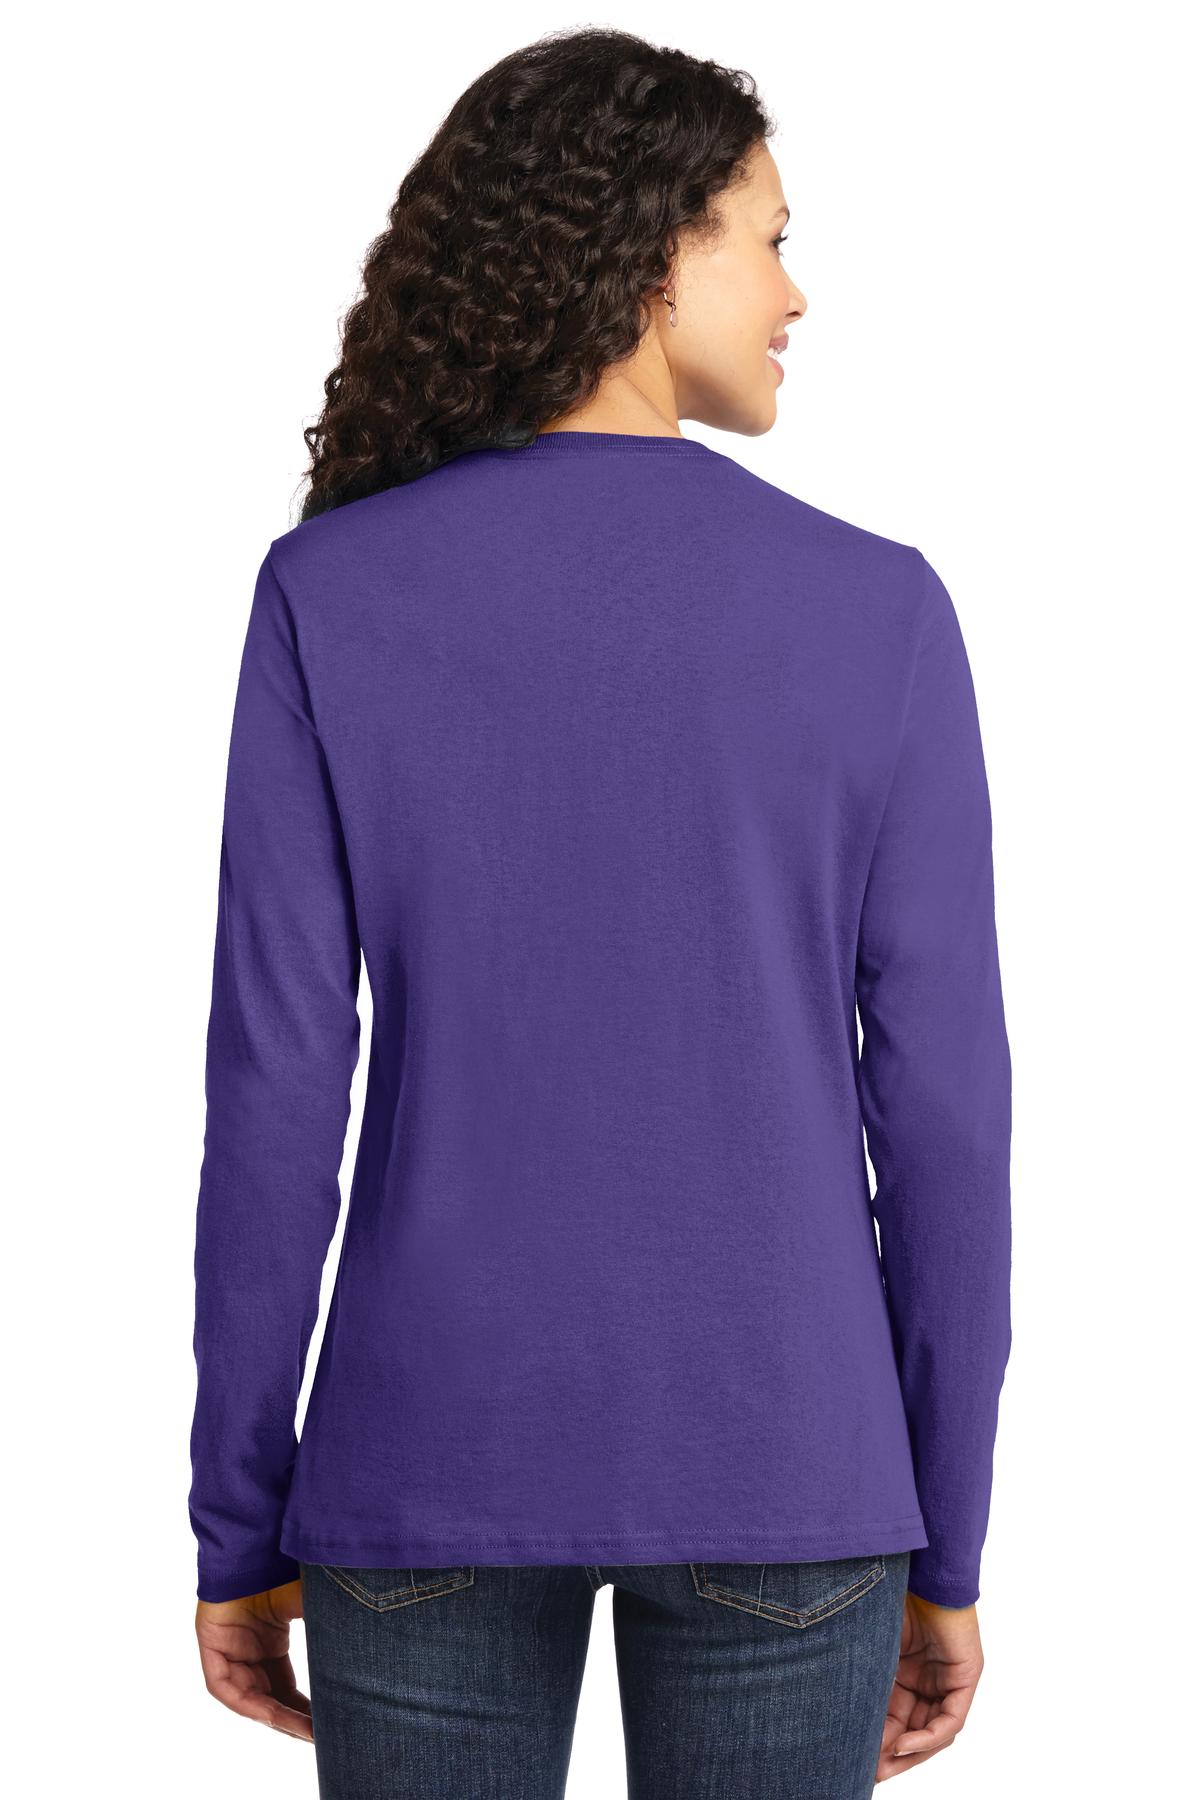 Port & Company Long Sleeve 54oz 100% Cotton TShirt (LPC54LS) Purple, XL - image 2 of 6